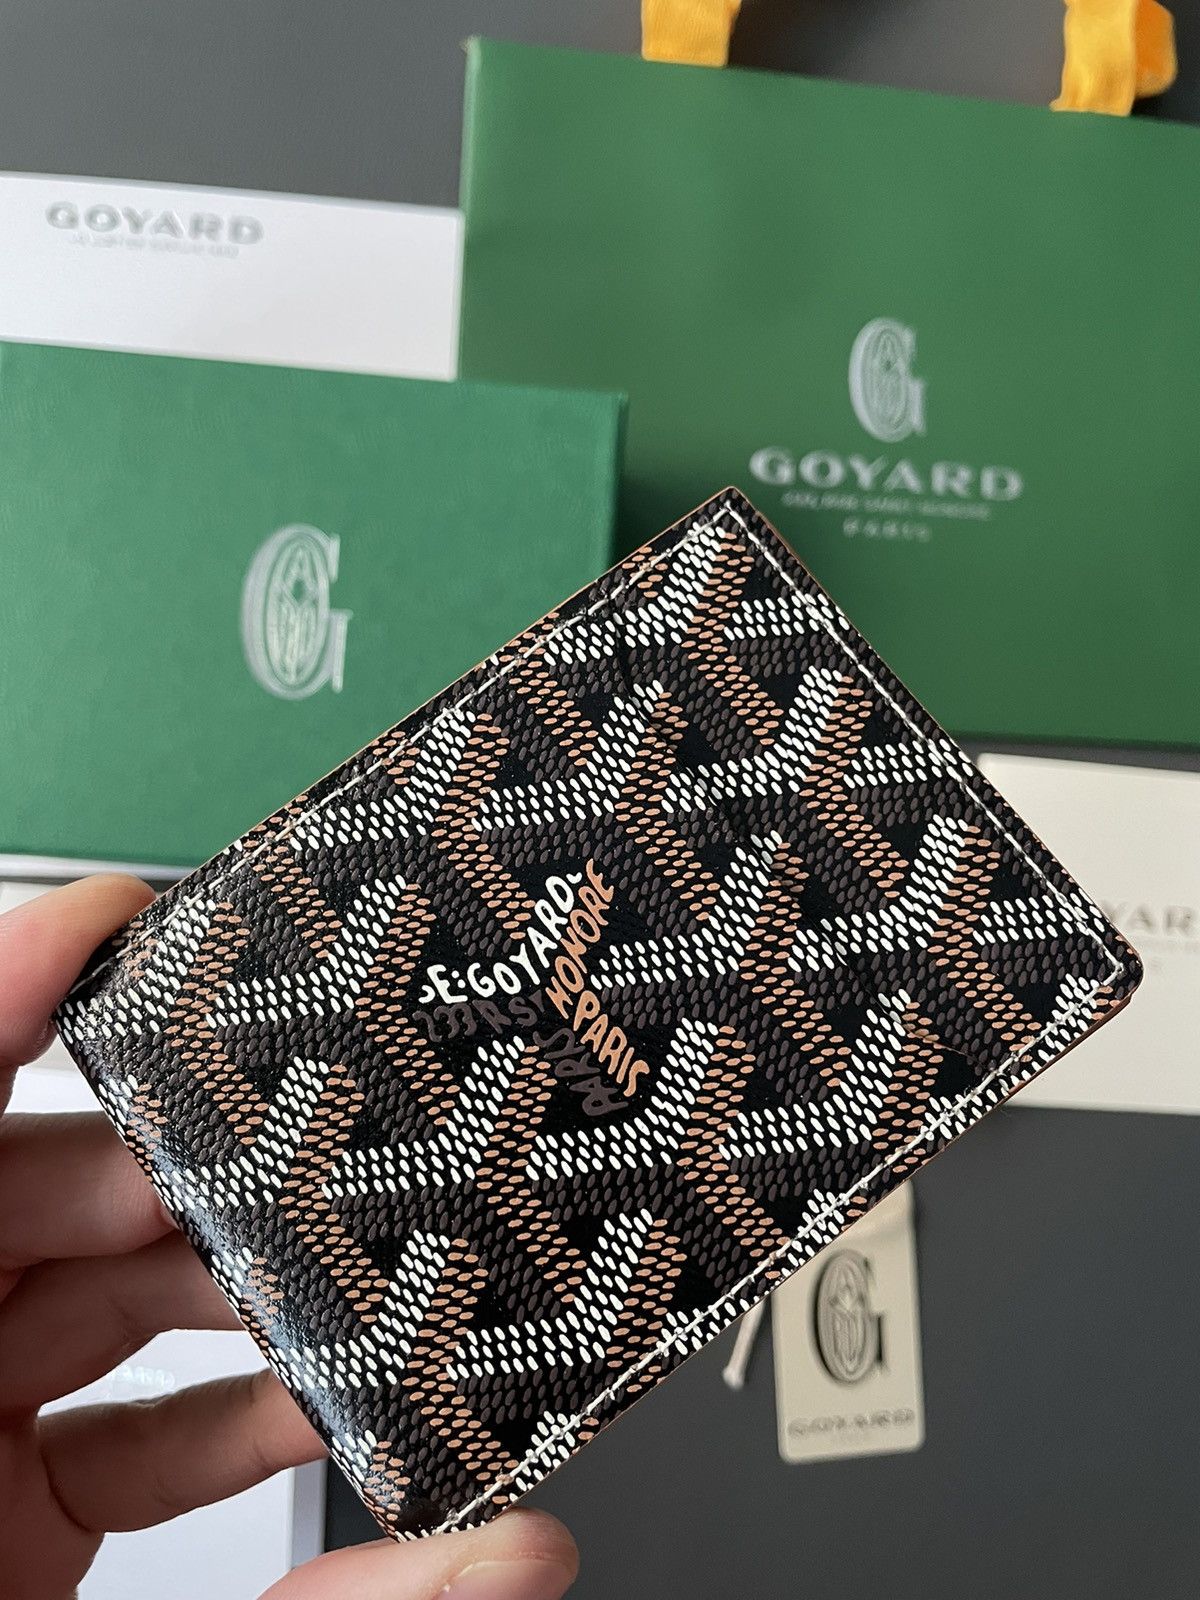 Goyard Men's Wallet